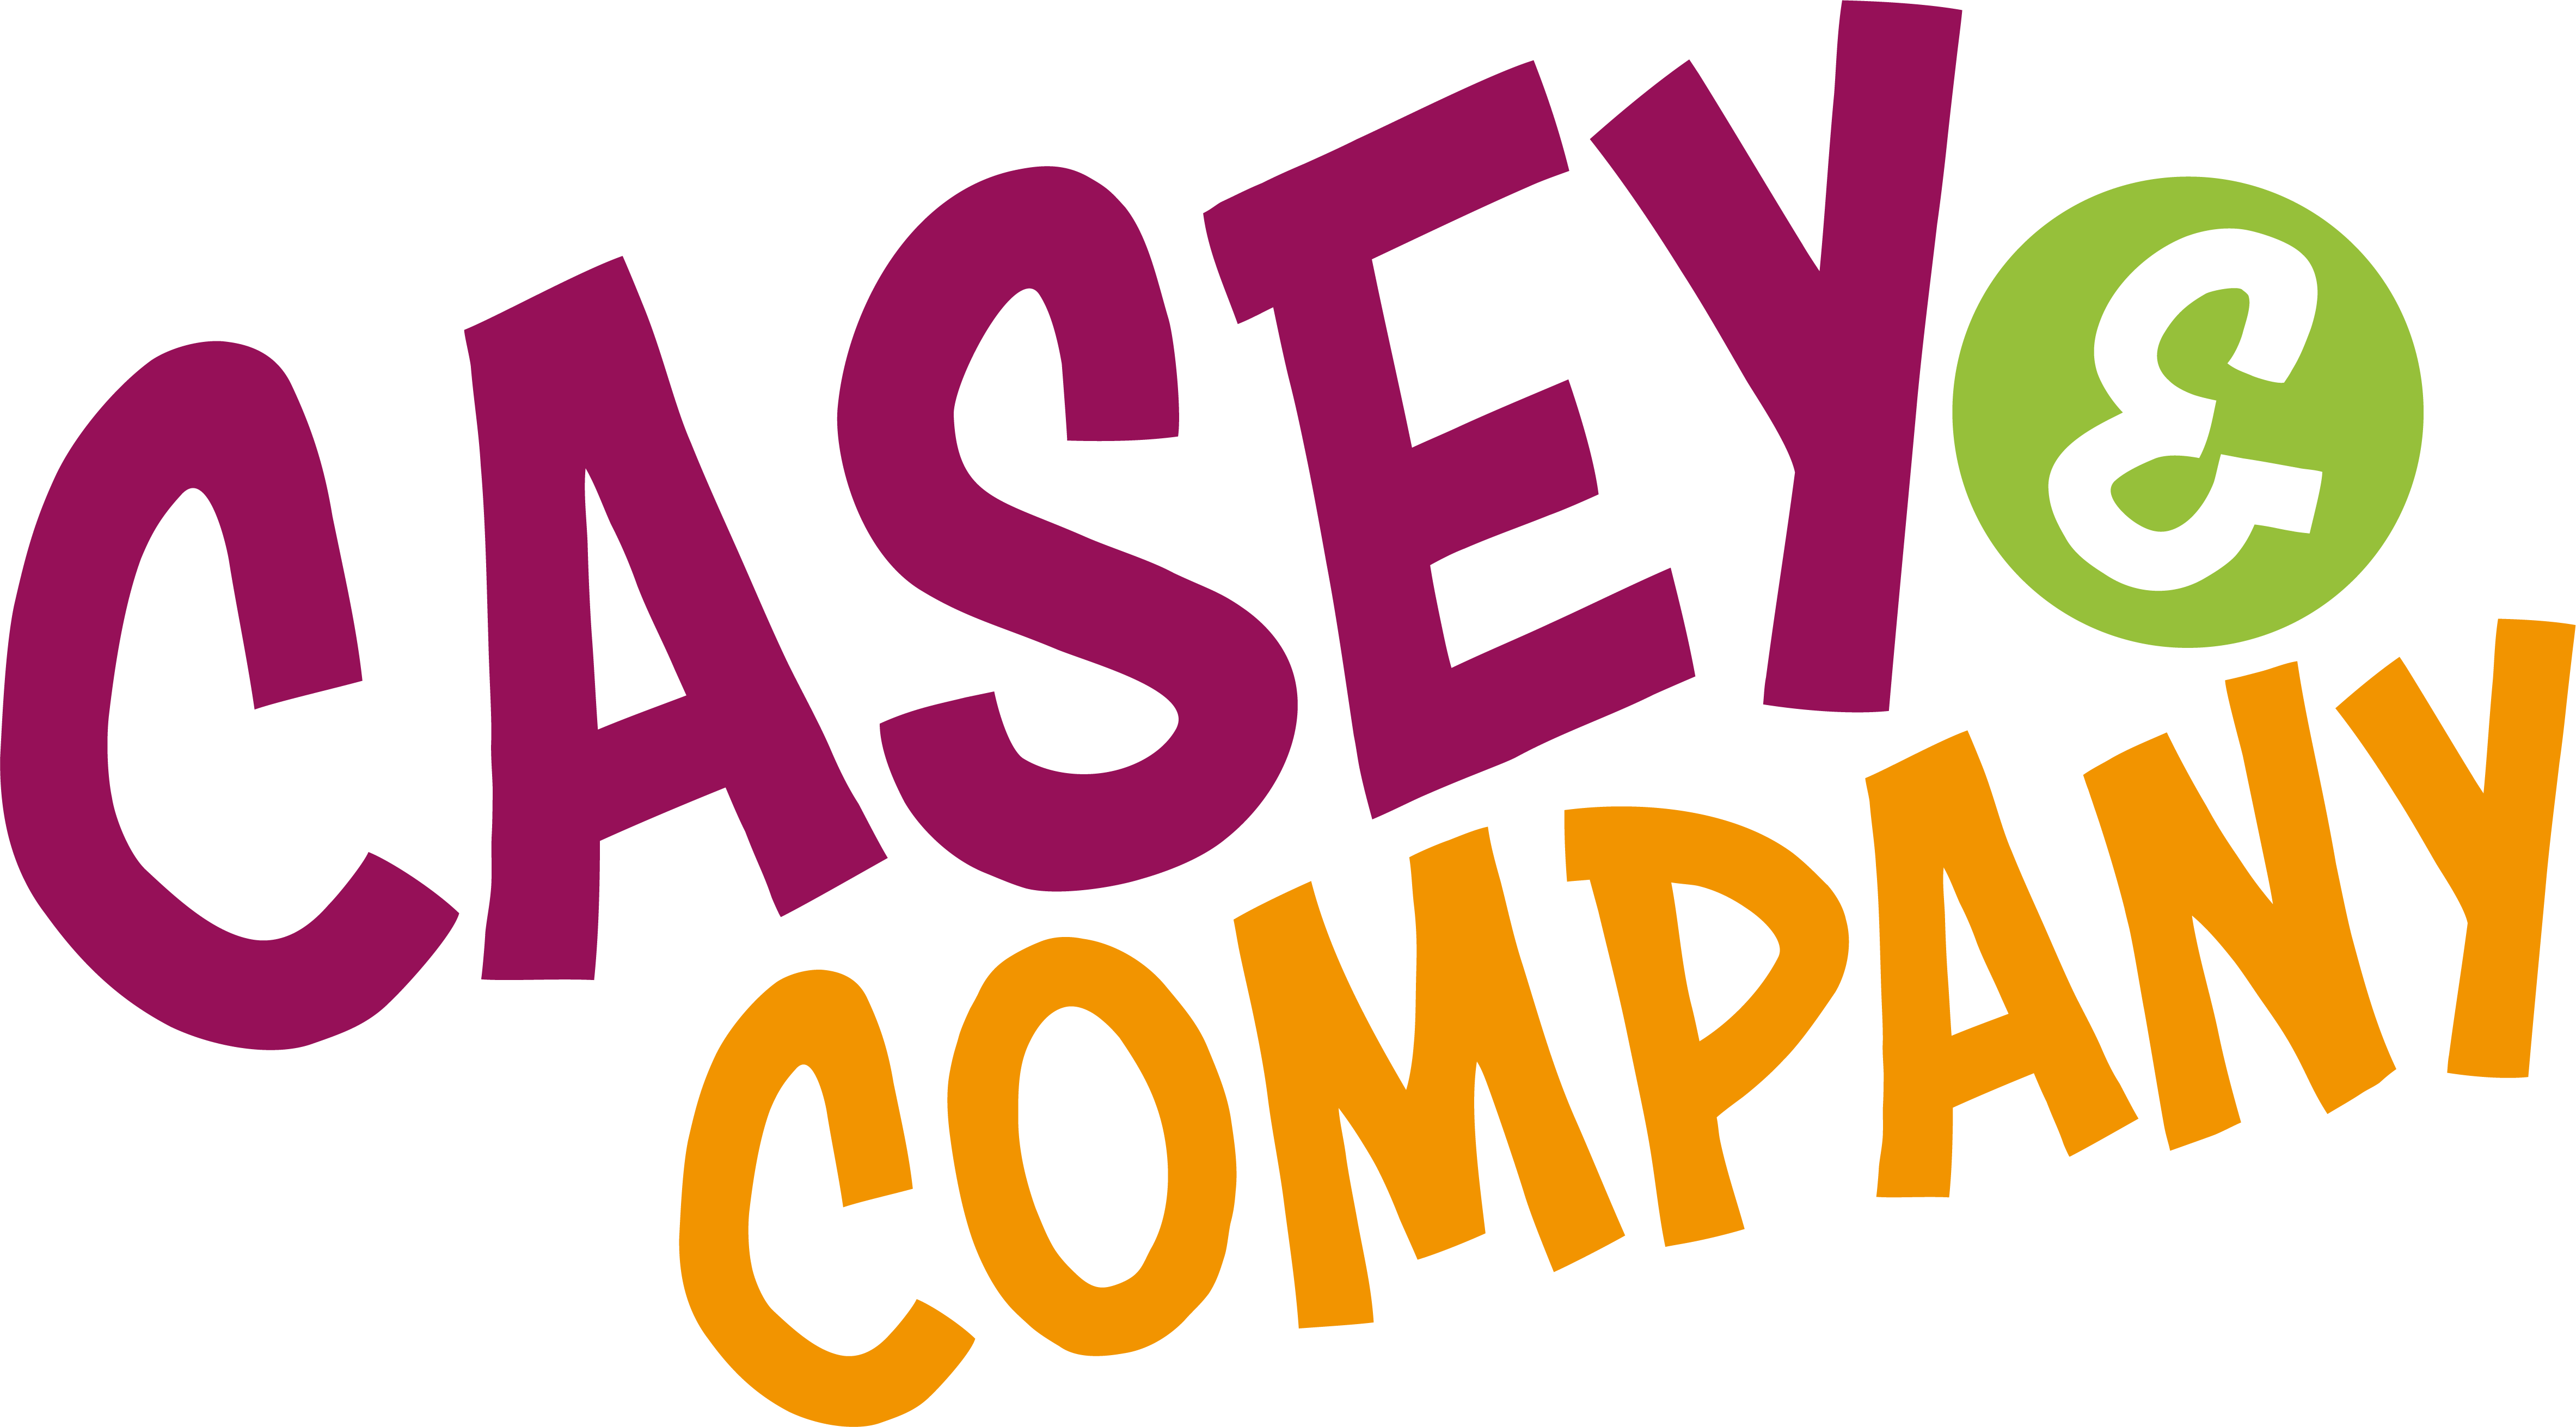 Casey_Company-color